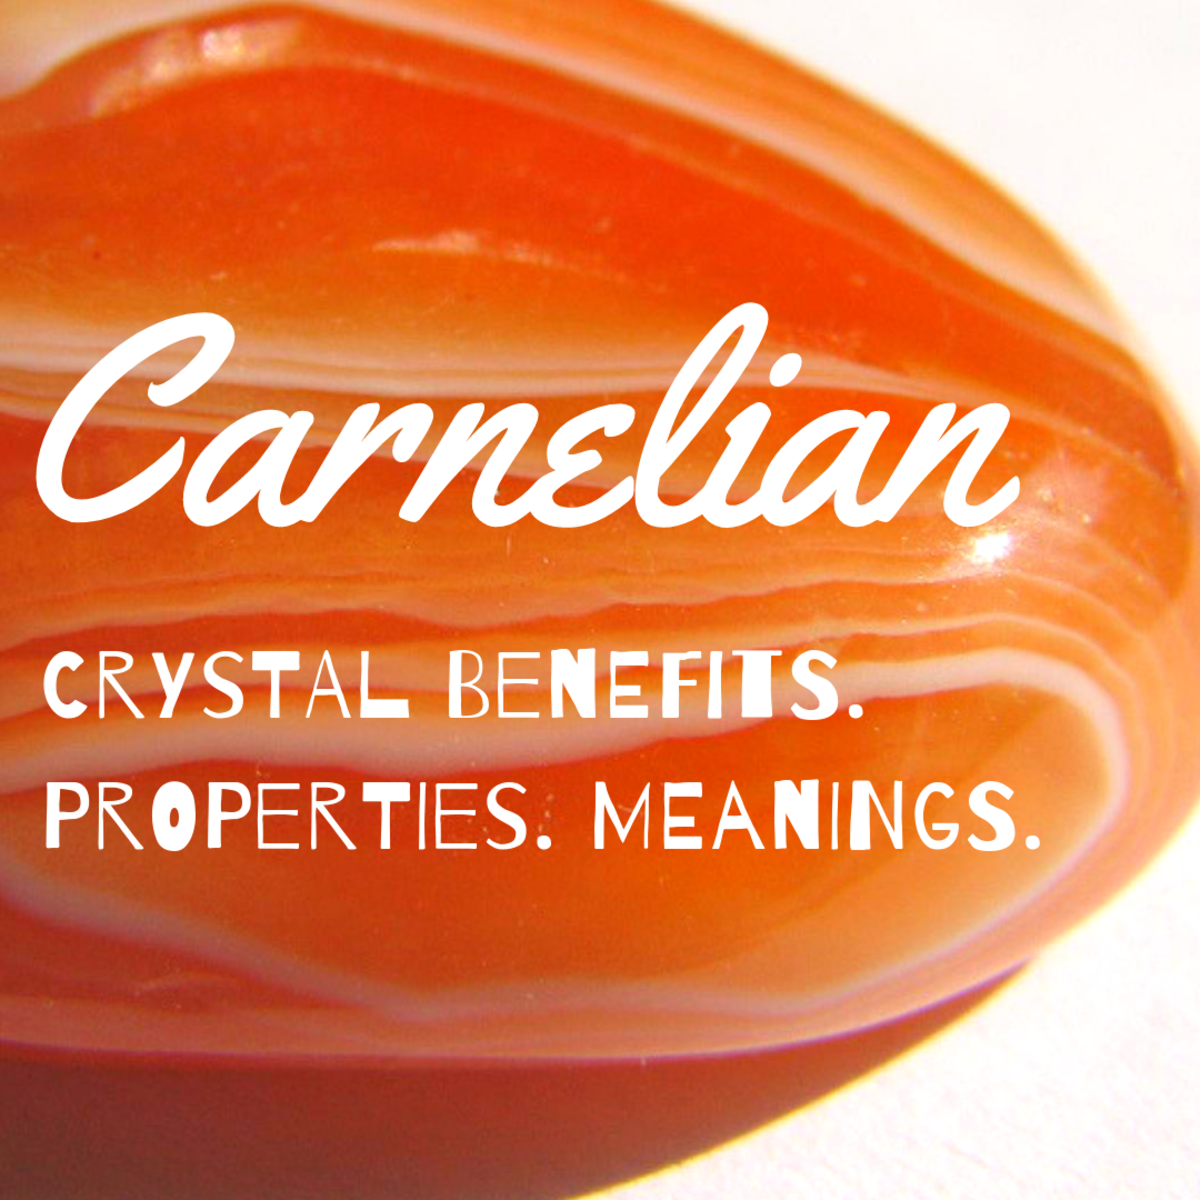 Carnelian crystal properties.